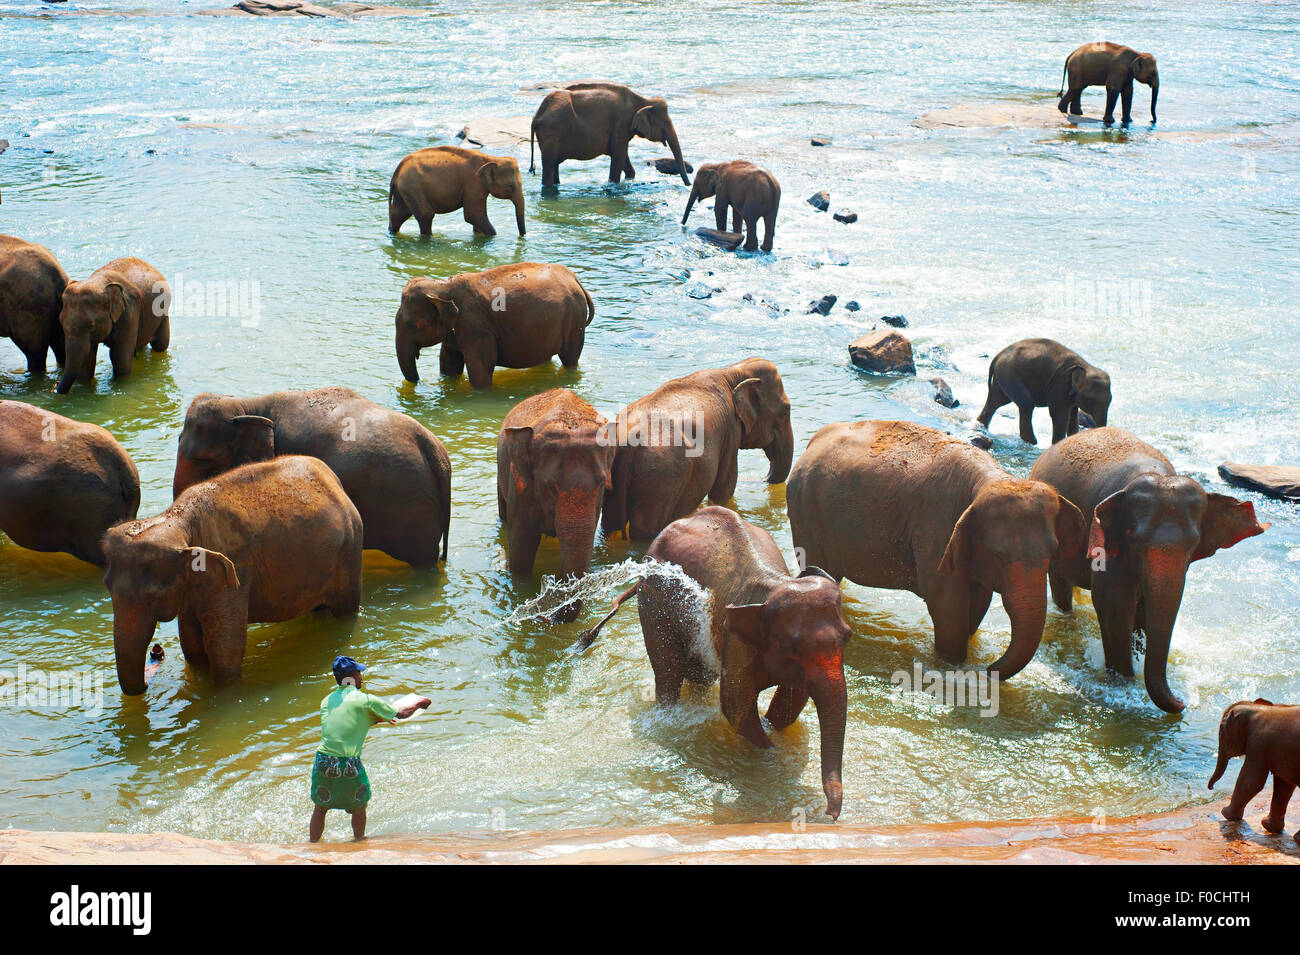 Elephants from the Pinnawela Elephant Orphanage in Pinnawela, Sri Lanka. Stock Photo